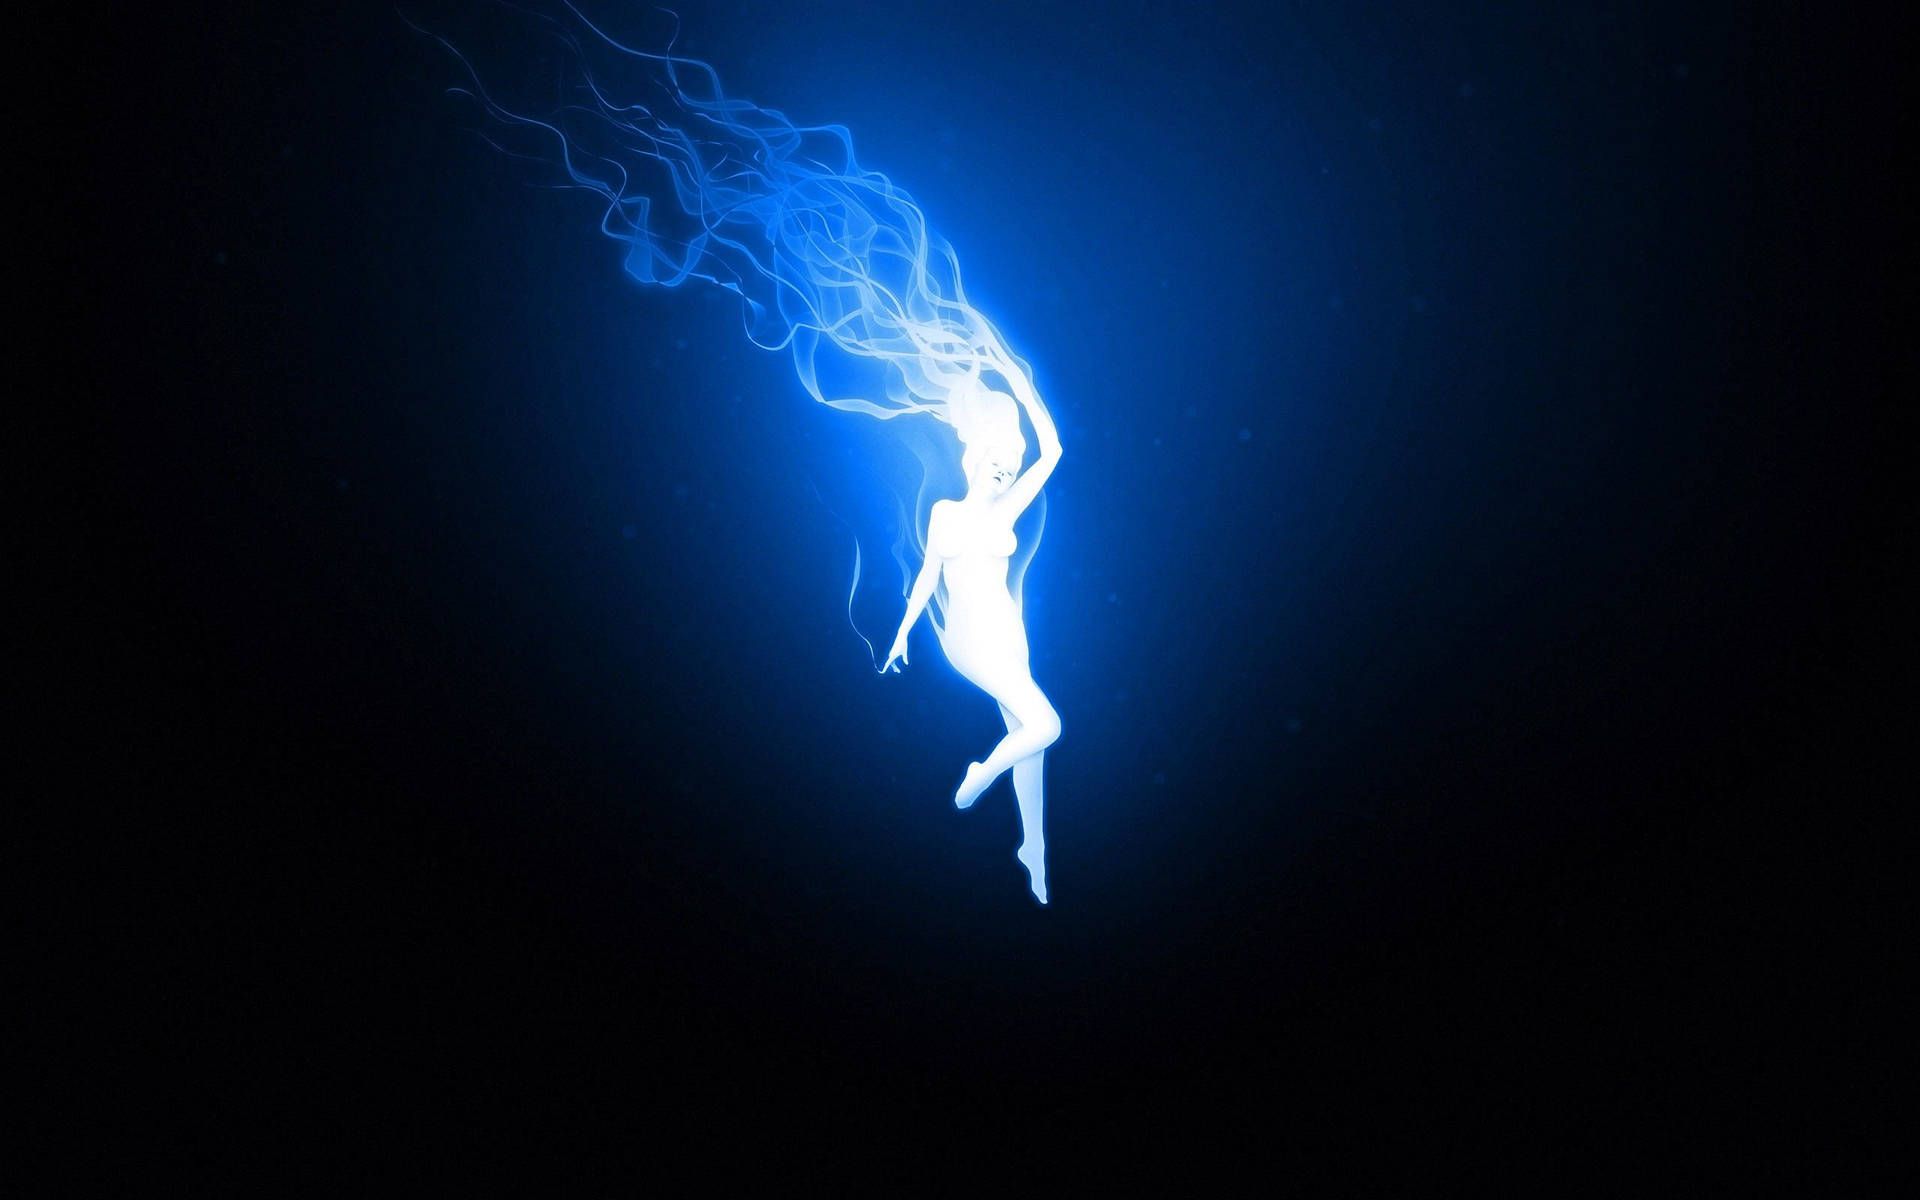 A blue lightning bolt in the sky - Underwater